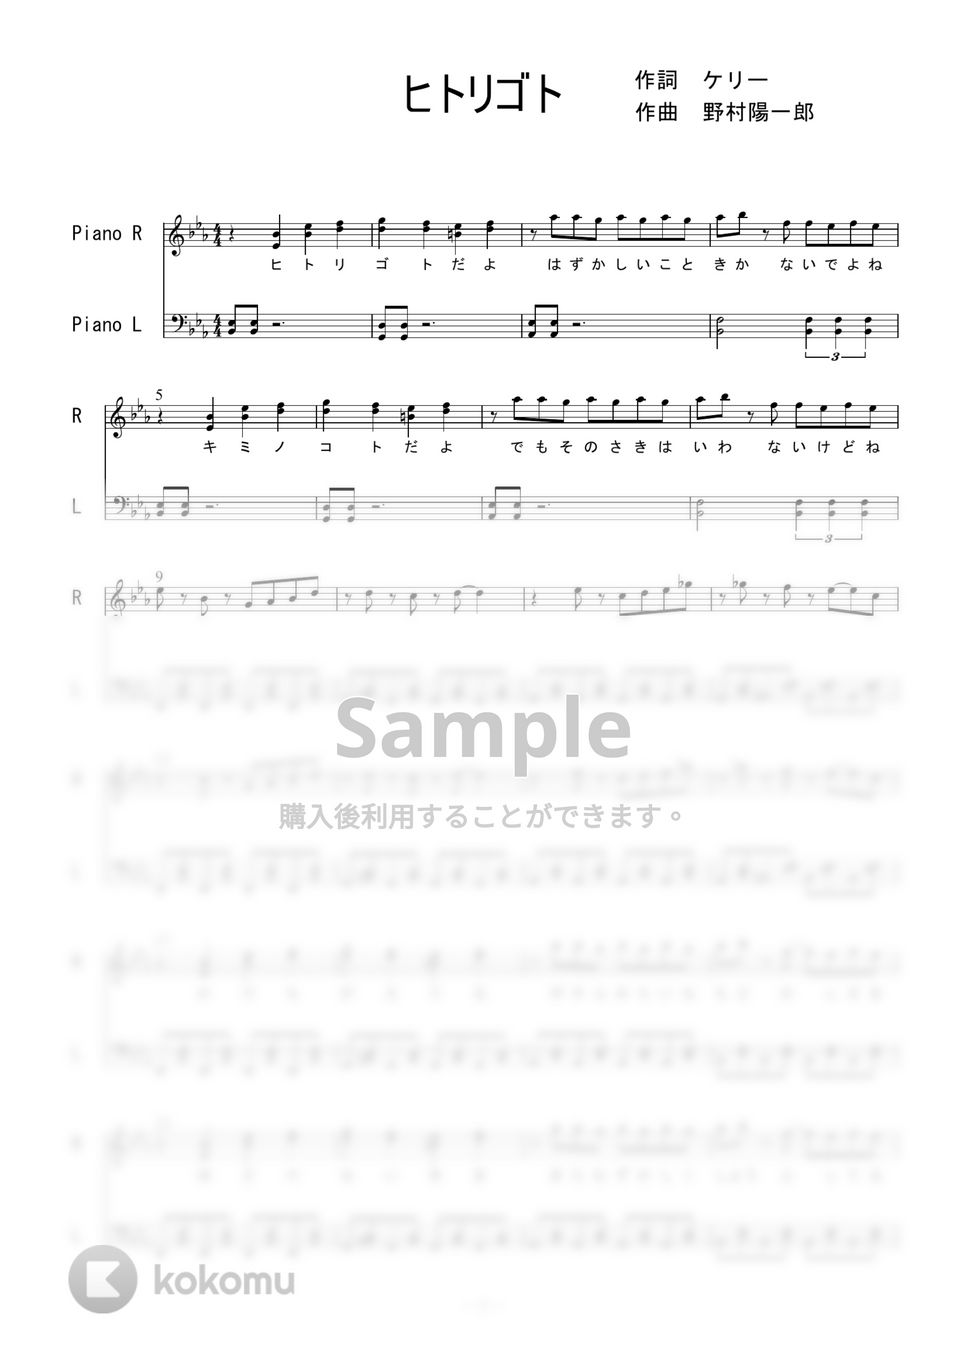 Claris - ヒトリゴト (ピアノソロ) by 二次元楽譜製作所